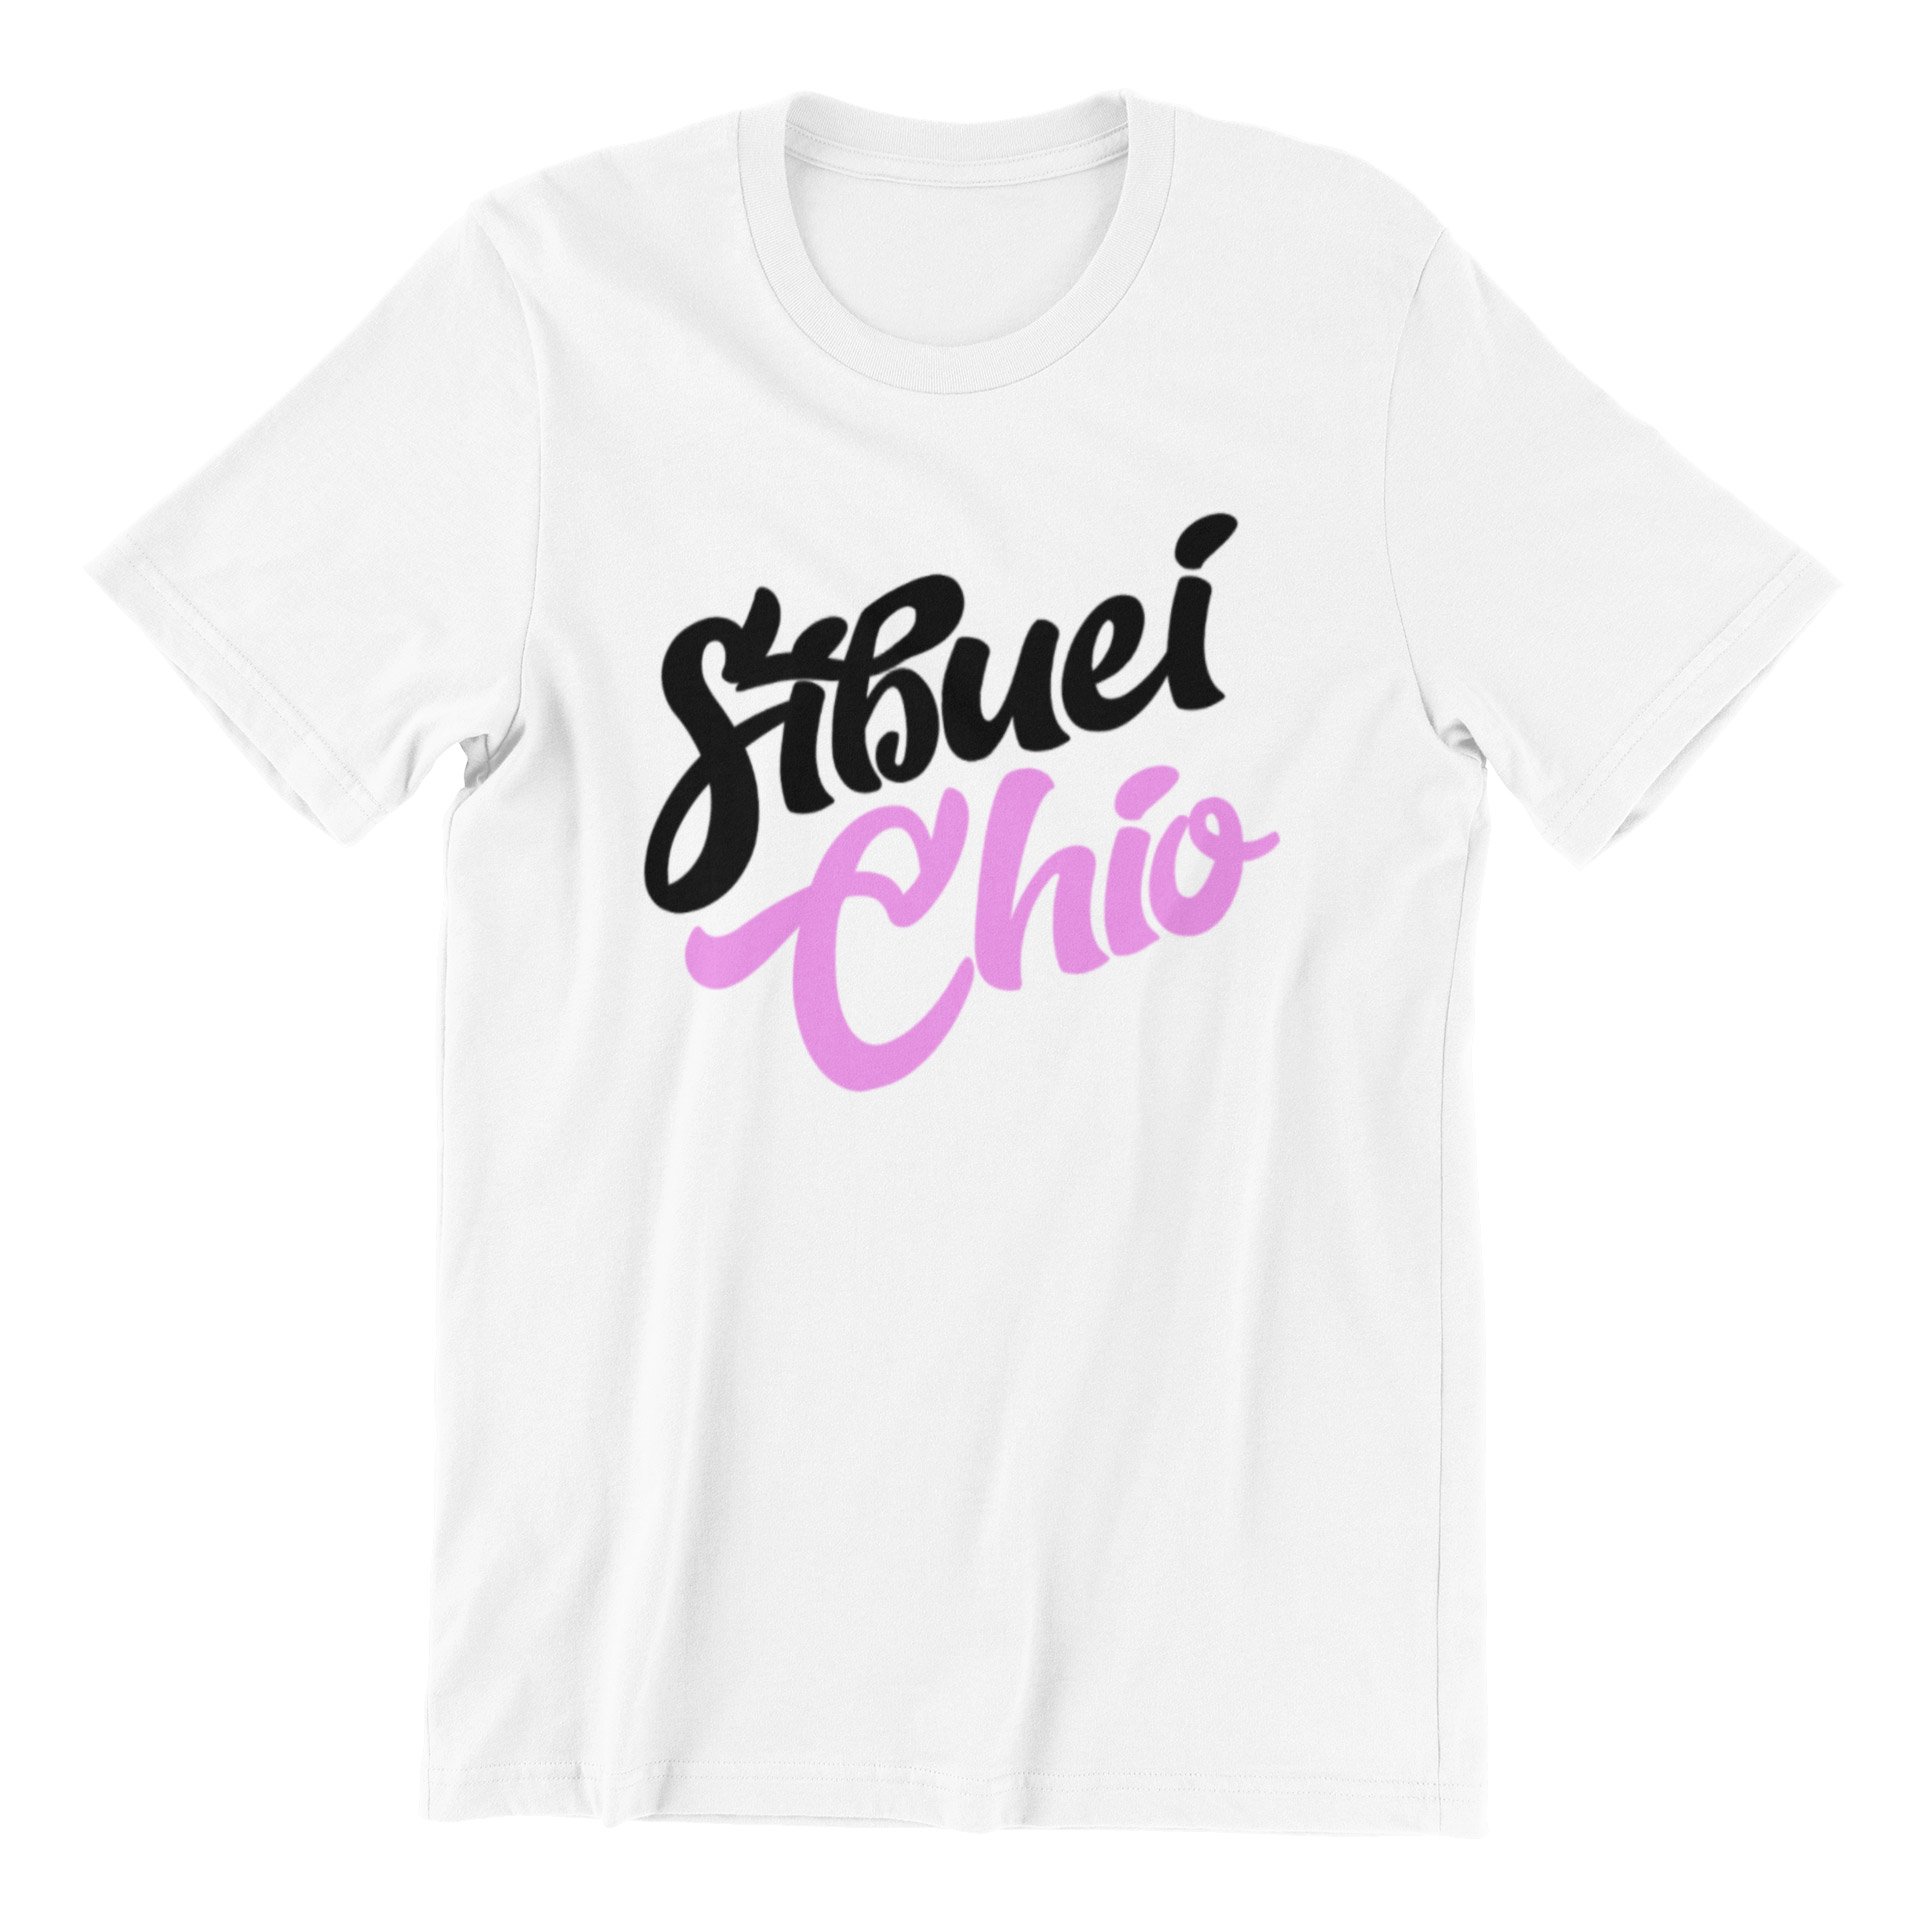 Sibuei Chio Crew Neck Short Sleeve T-shirt